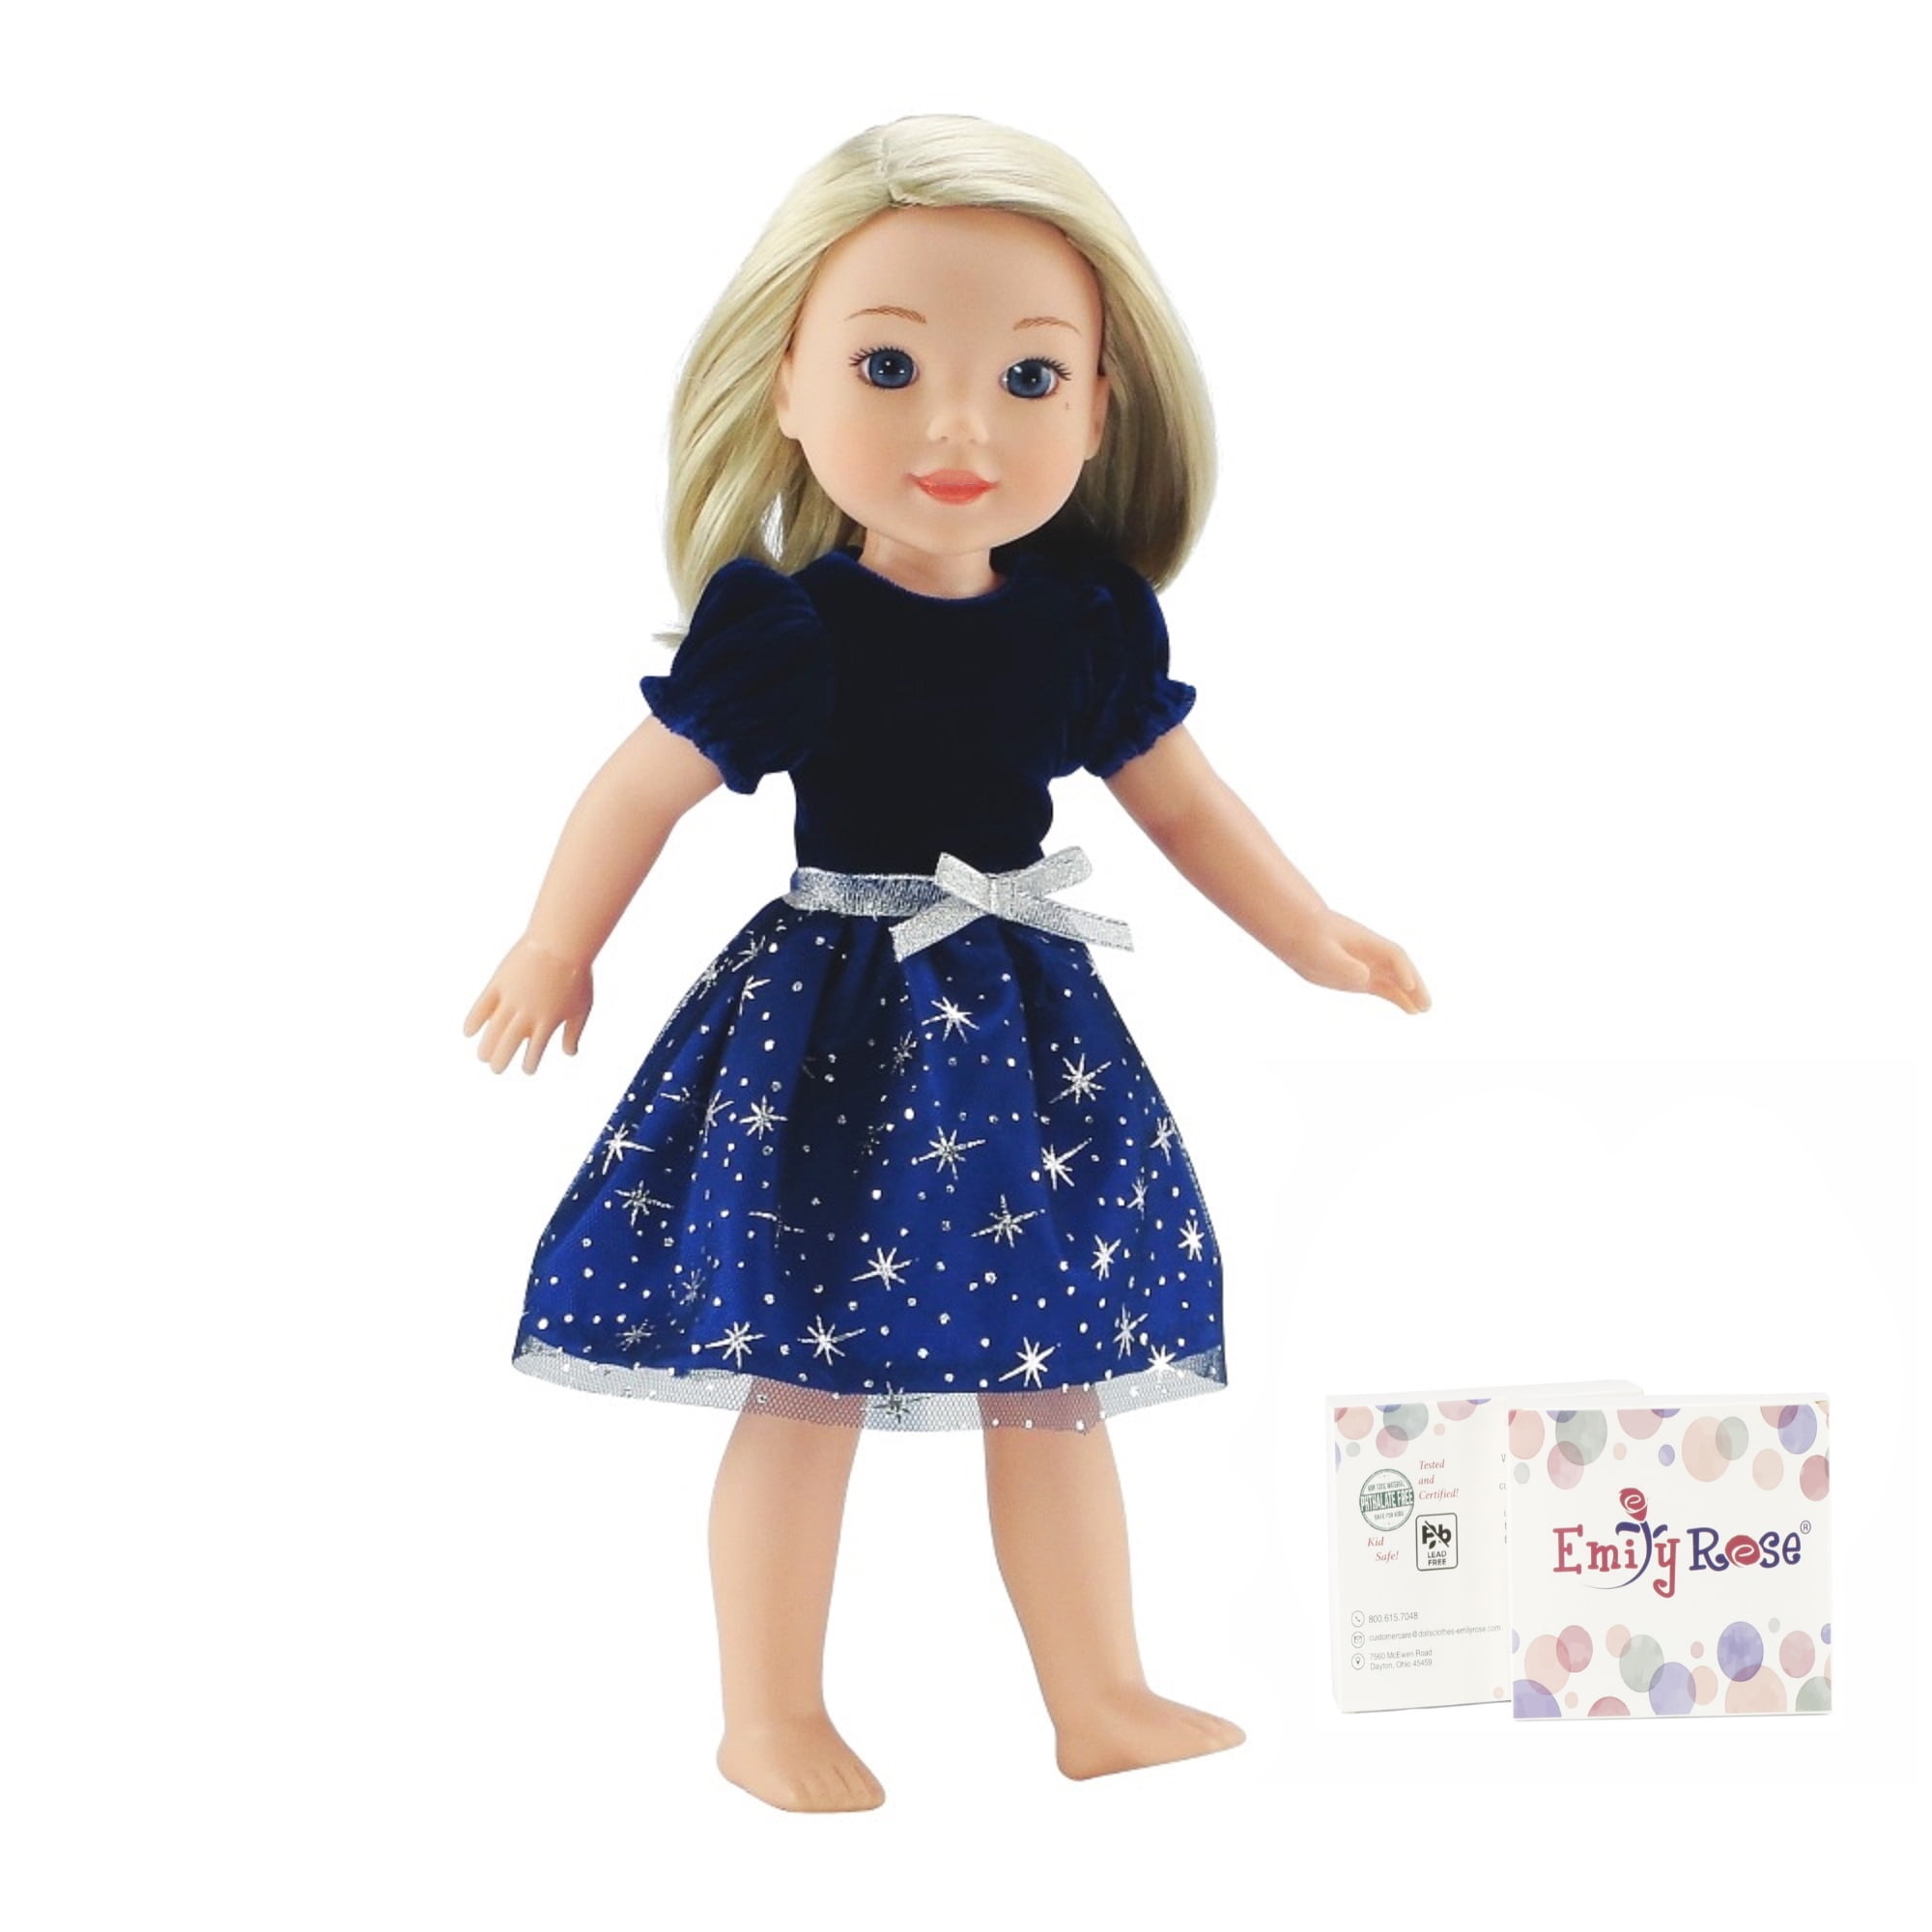 Emily Rose 14 Inch Doll Clothes  Blue Velvet Party Dress for 14